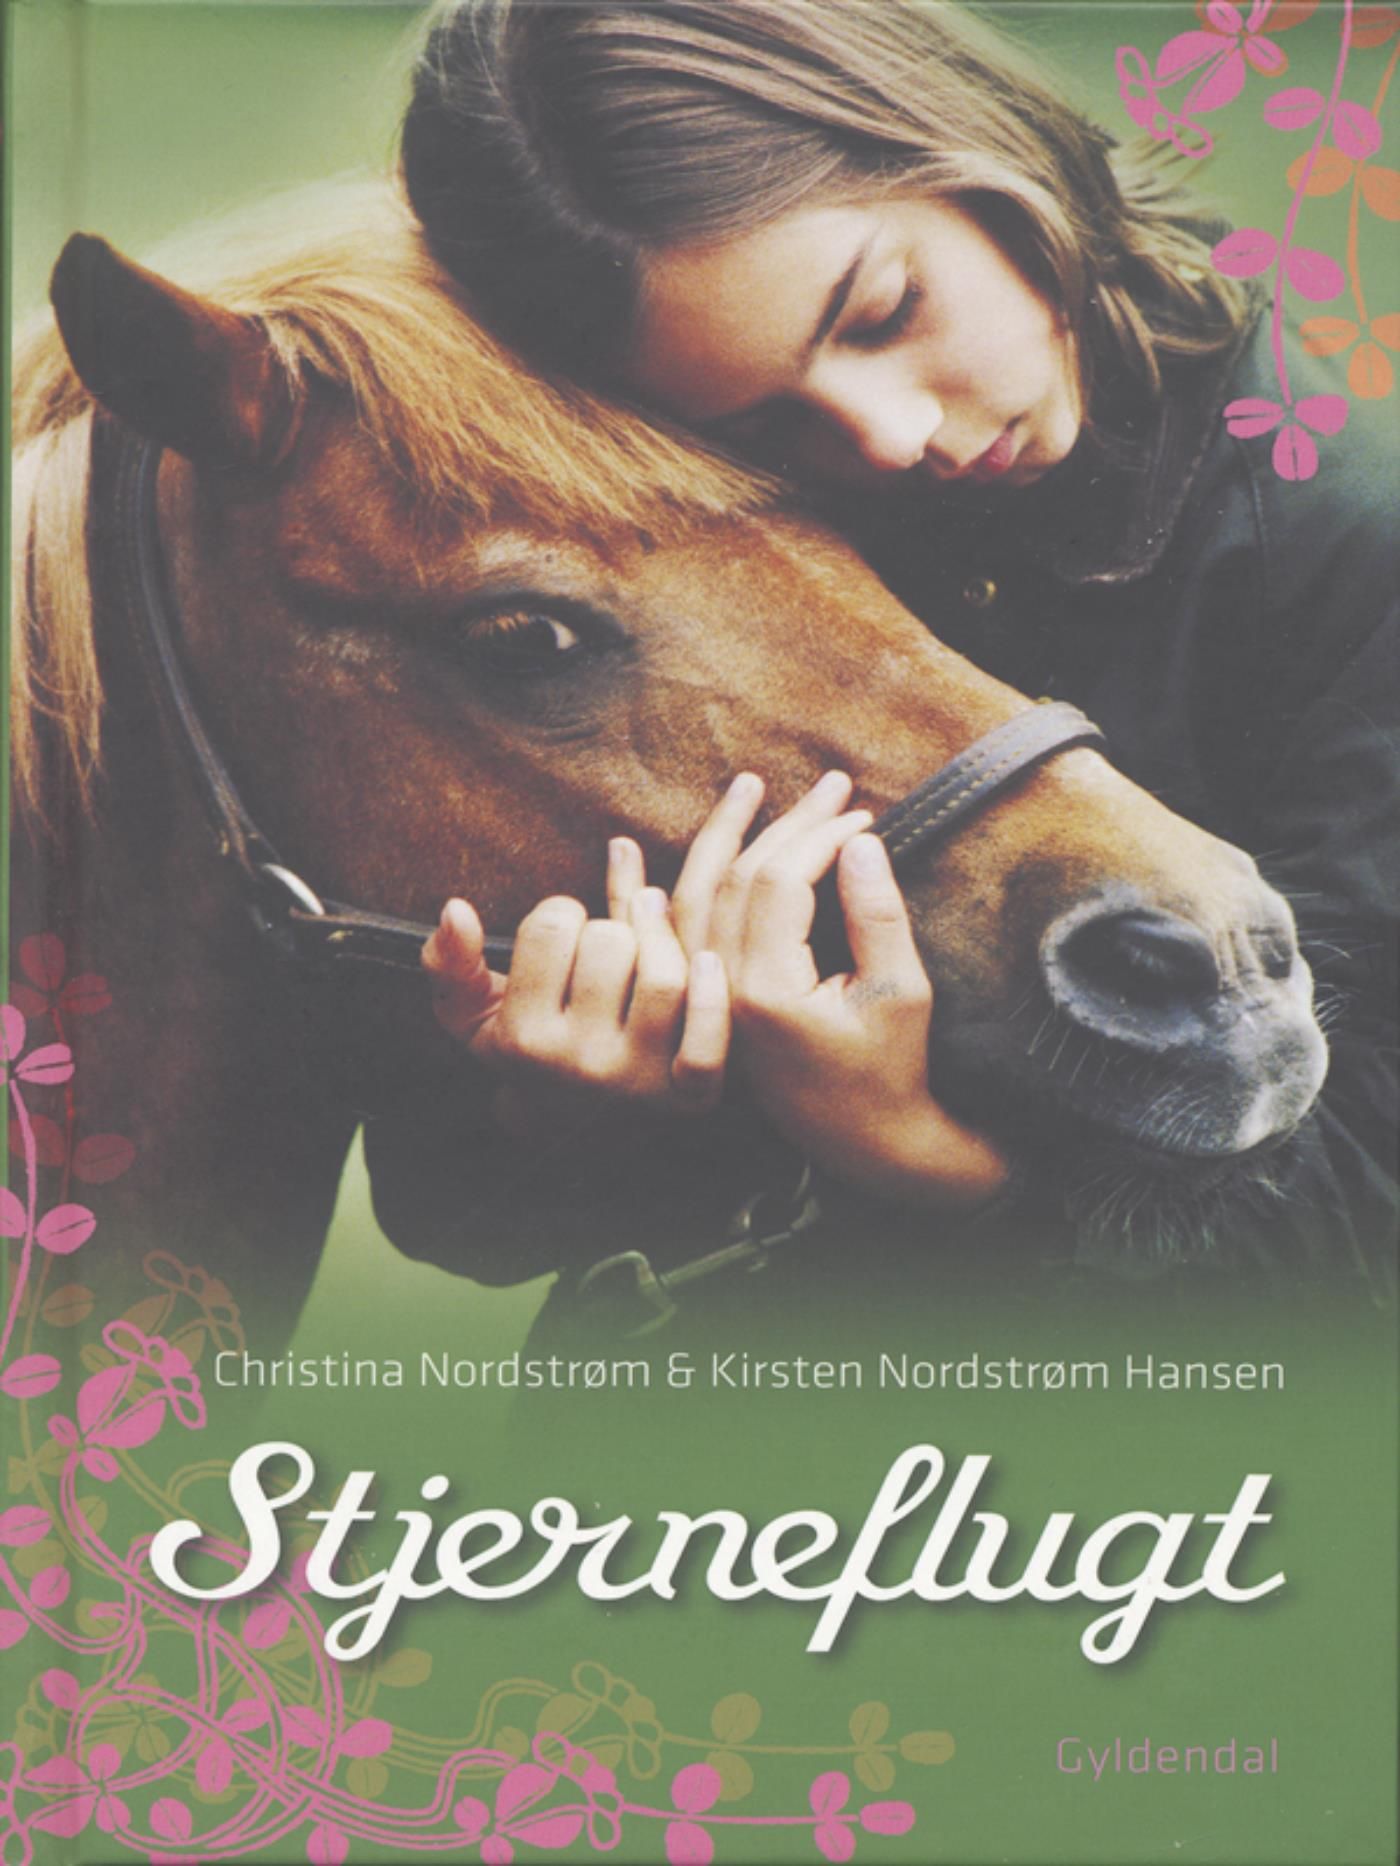 Stjerneflugt, e-bok av Kirsten Nordstrøm Hansen, Christina Nordstrøm